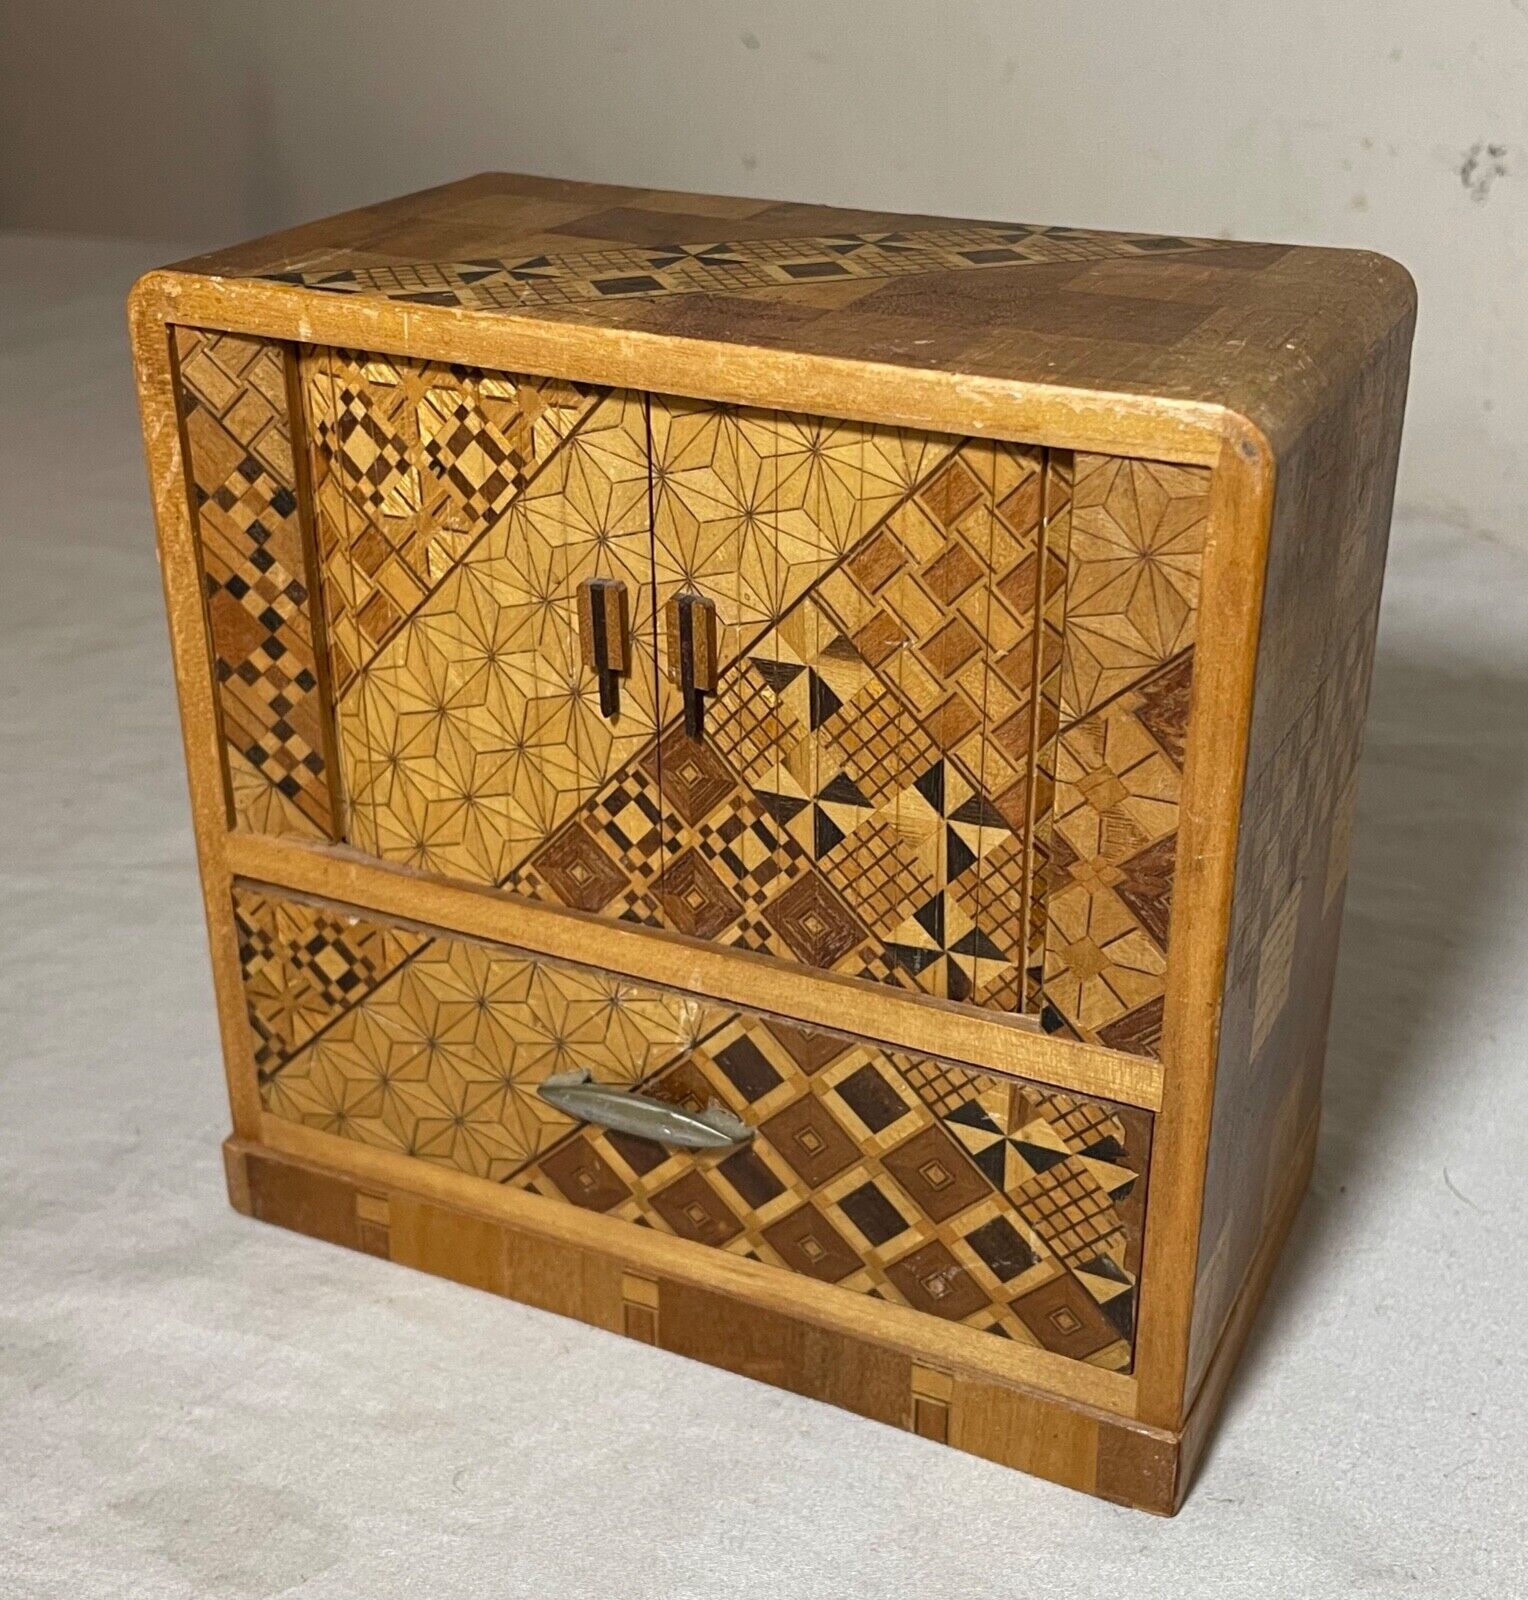 Elaborate antique handmade inlaid marquetry wood mini jewelry box sculpture